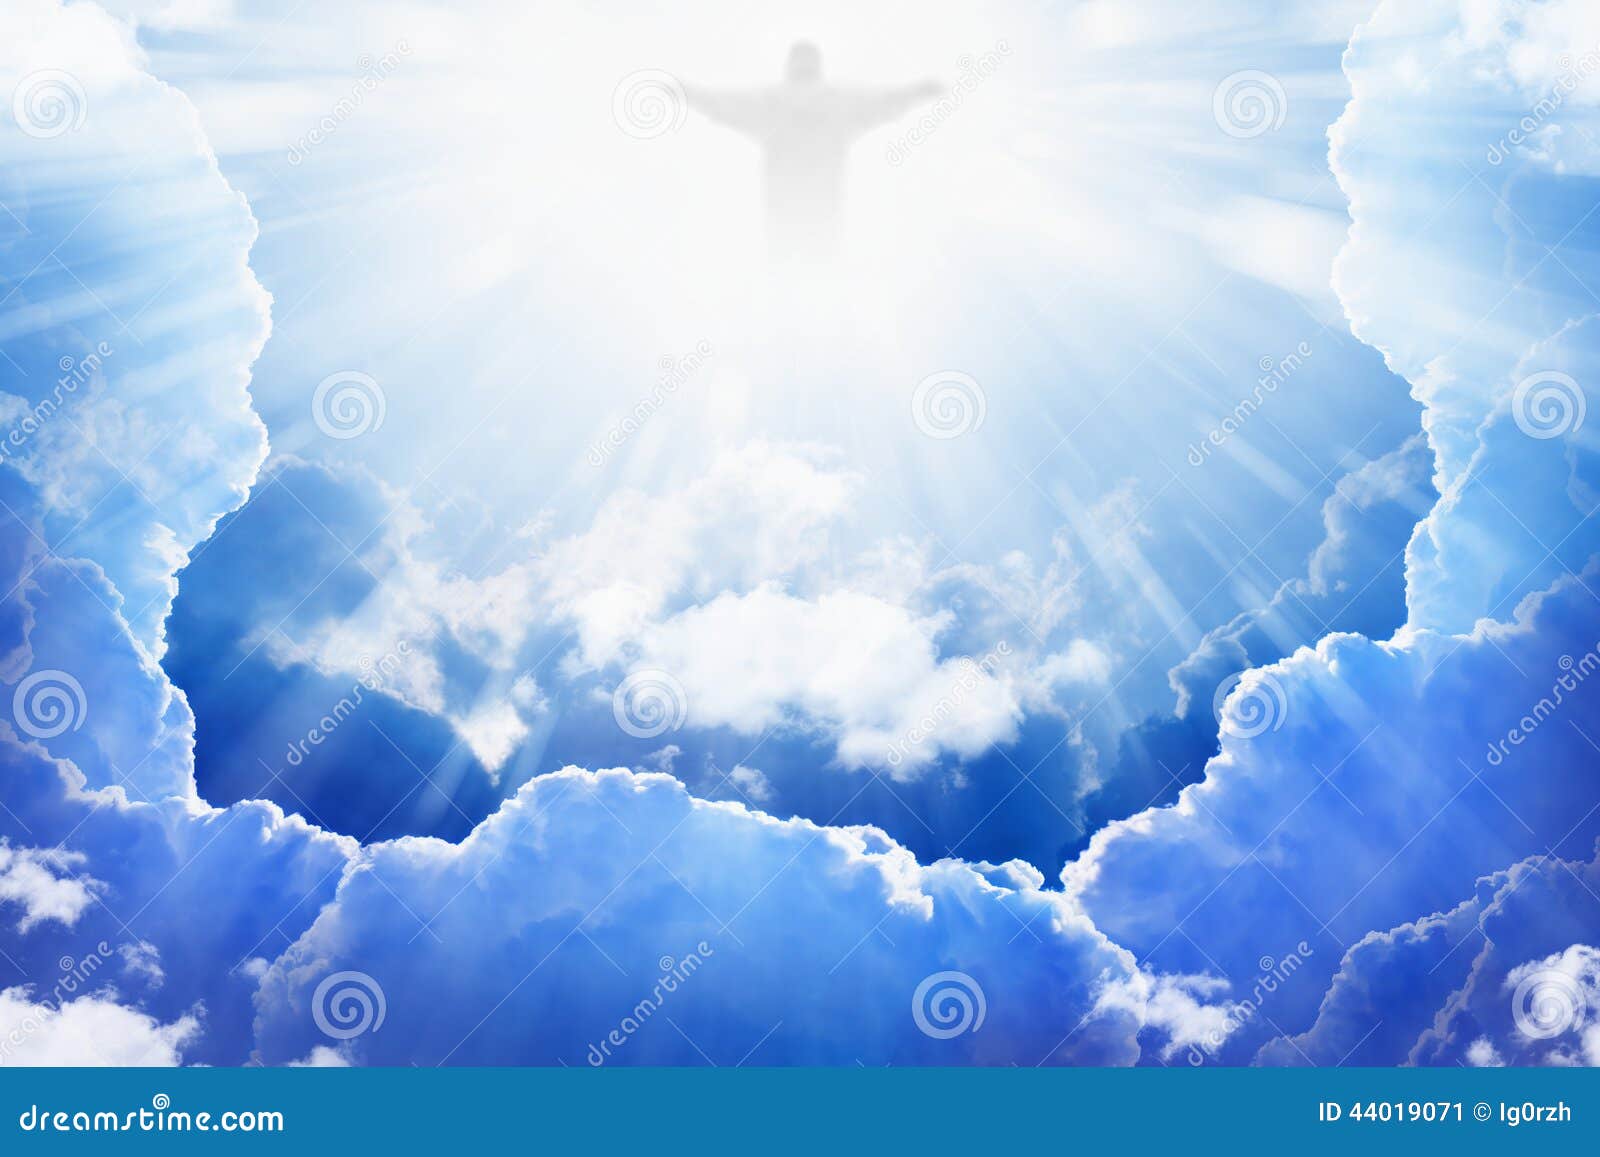 clipart jesus in heaven - photo #37